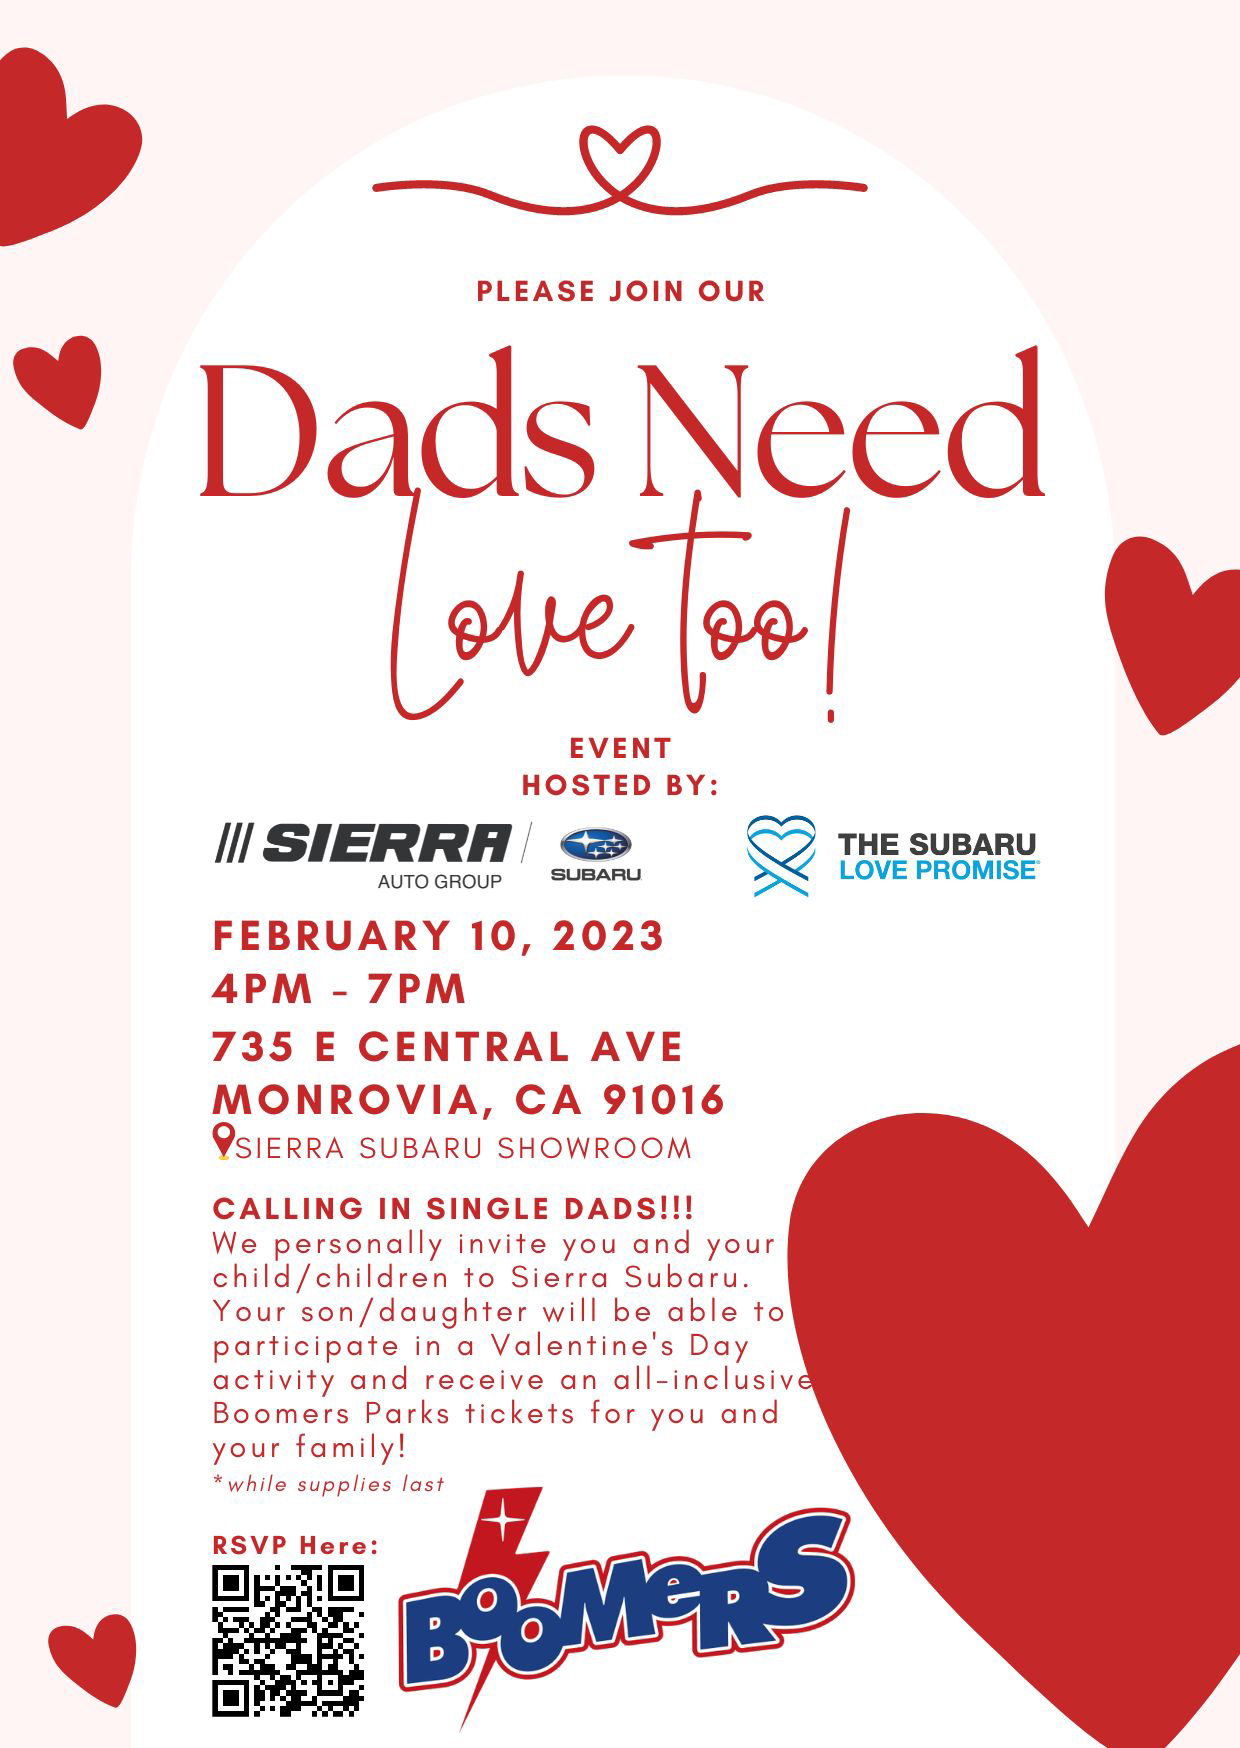 Sierra Subaru Dads need love too event flyer 